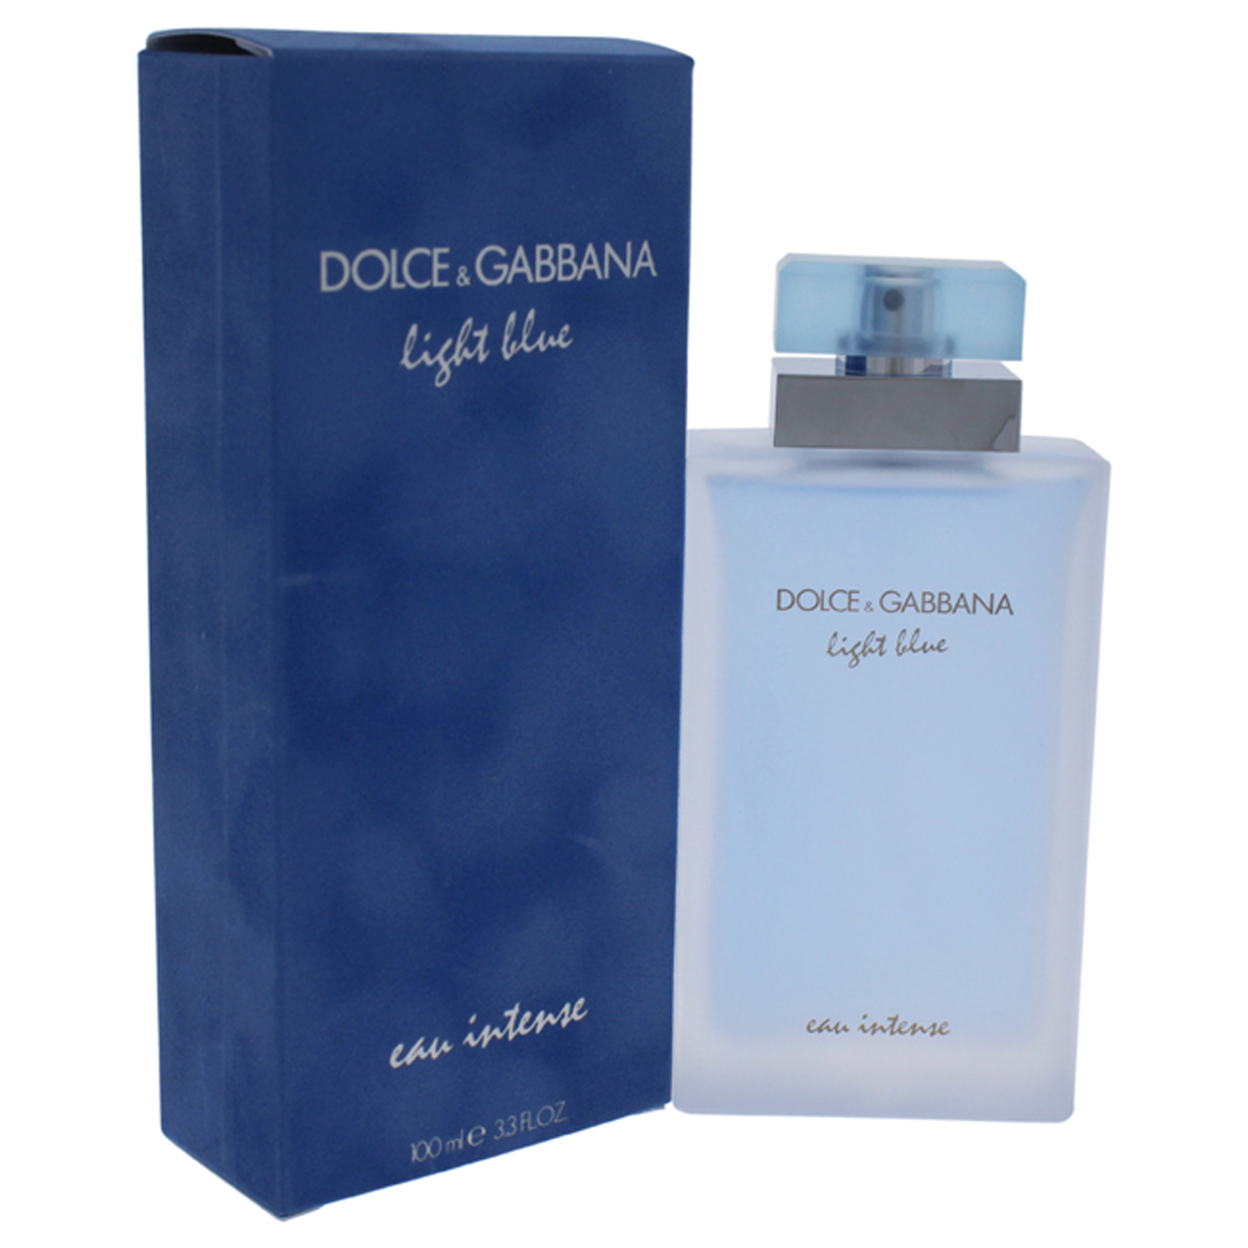 Dolce & Gabbana Light Blue Eau Intense EDP Spray 3.3 Oz